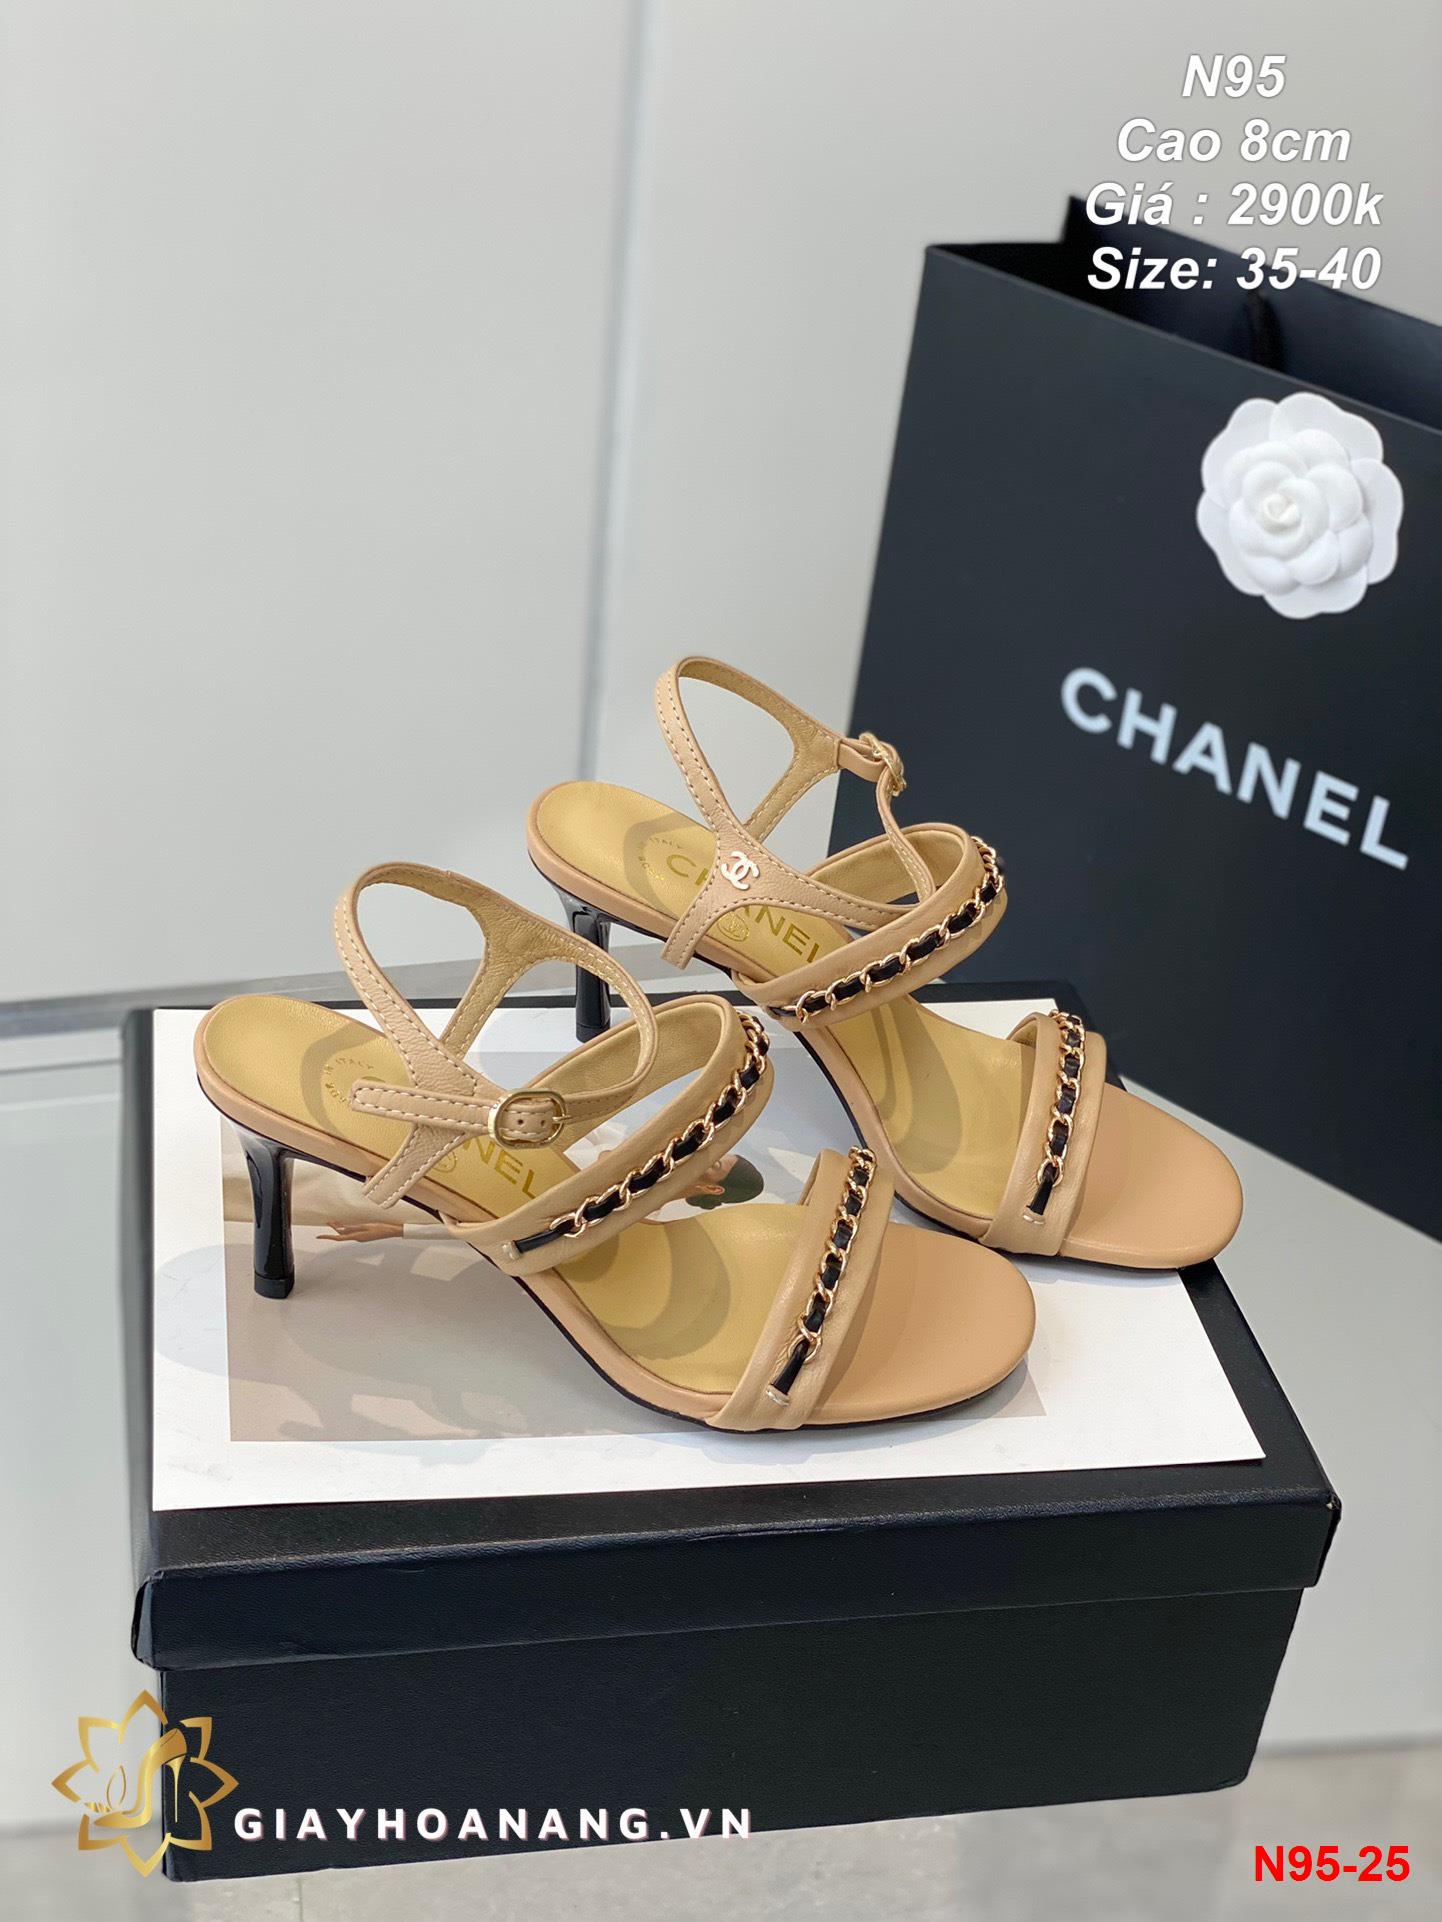 N95-25 Chanel sandal cao 8cm siêu cấp